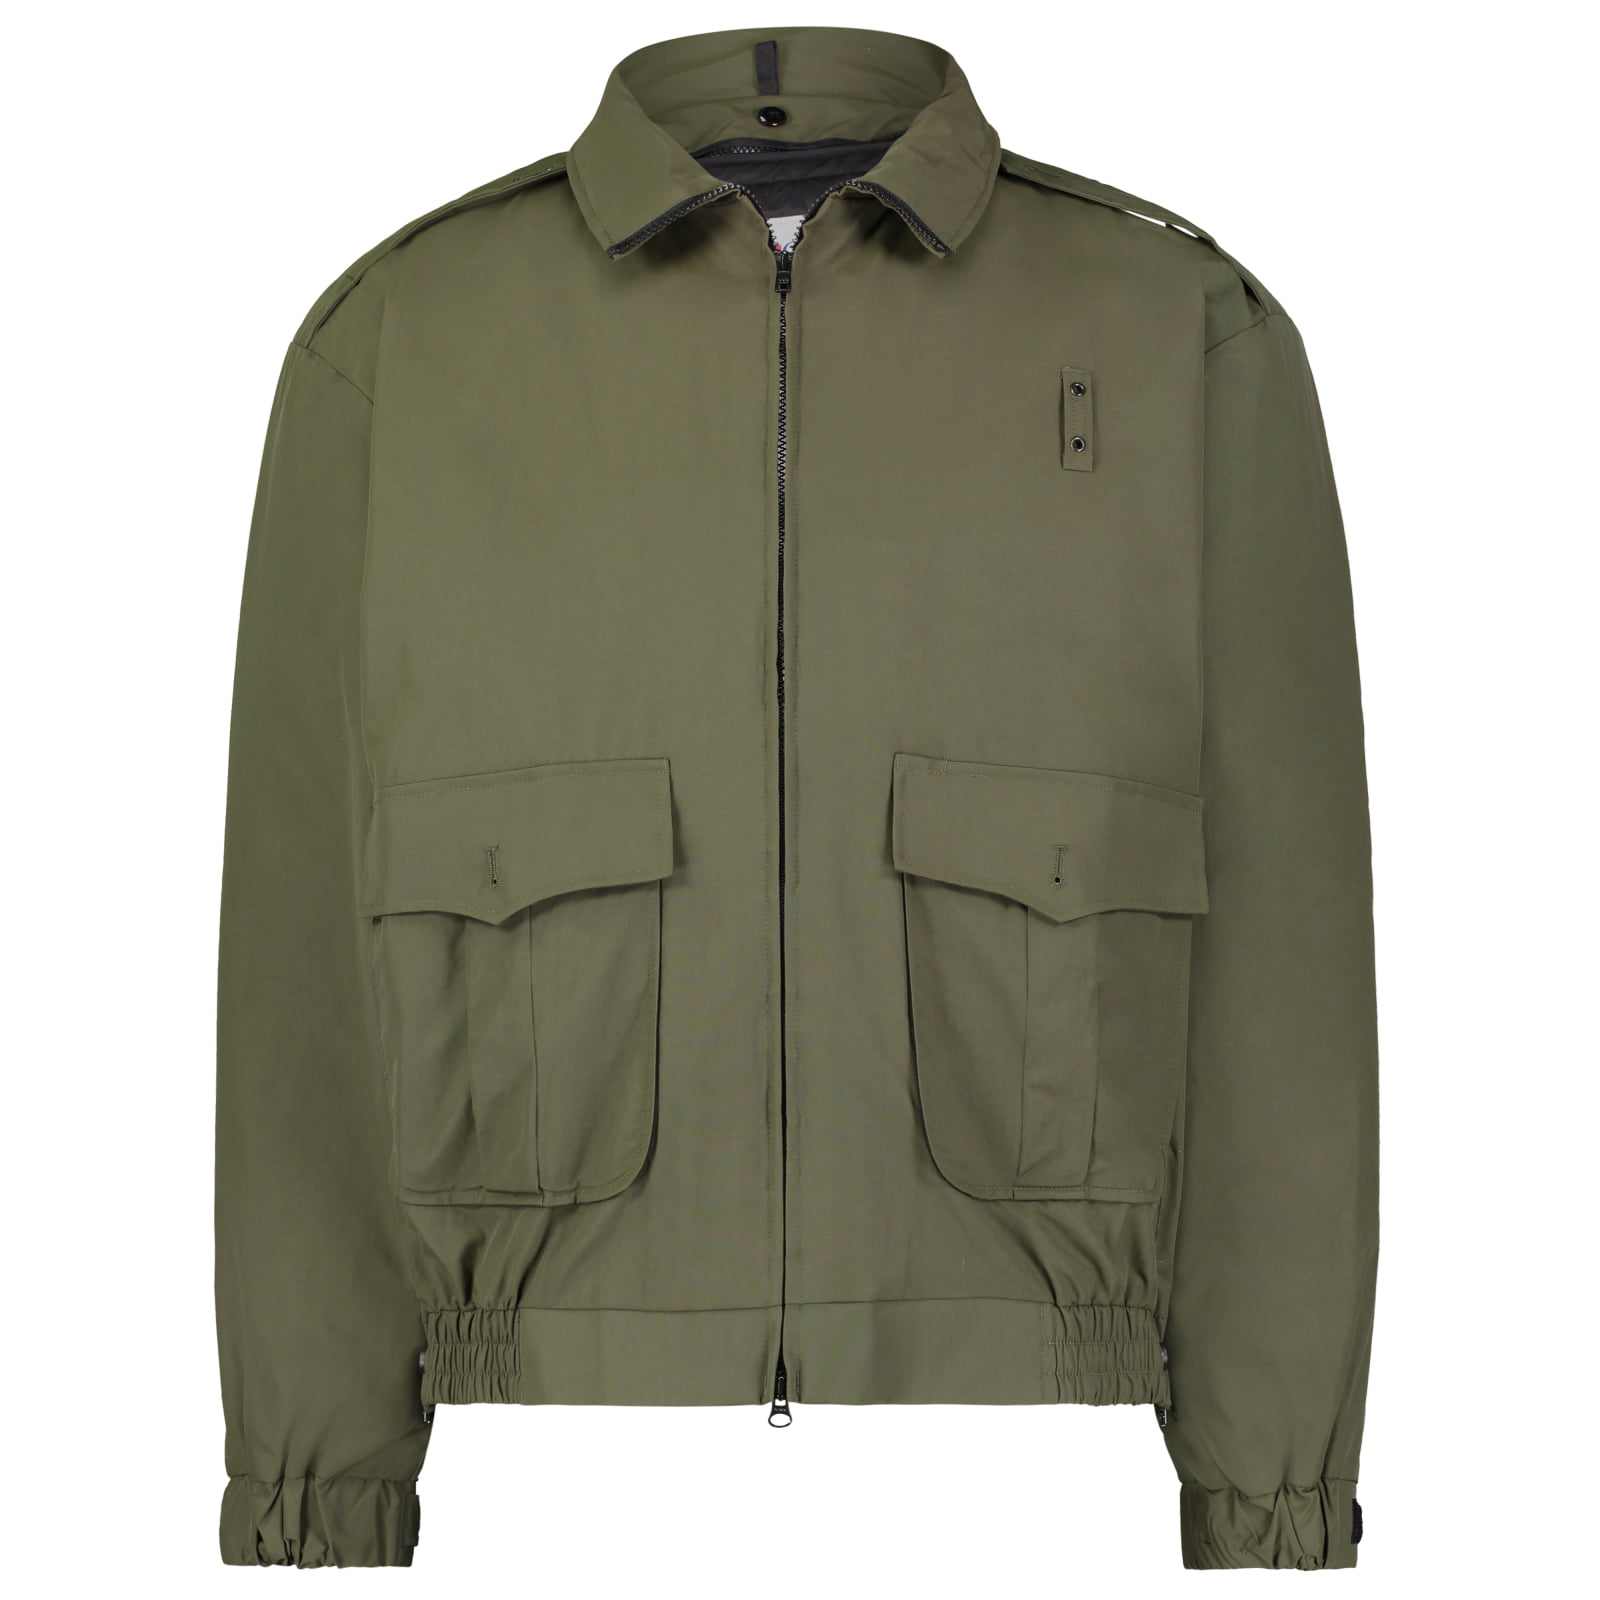 Jacket, Duty with Liner, #59135, Green, Size LXL - Walmart.com ...